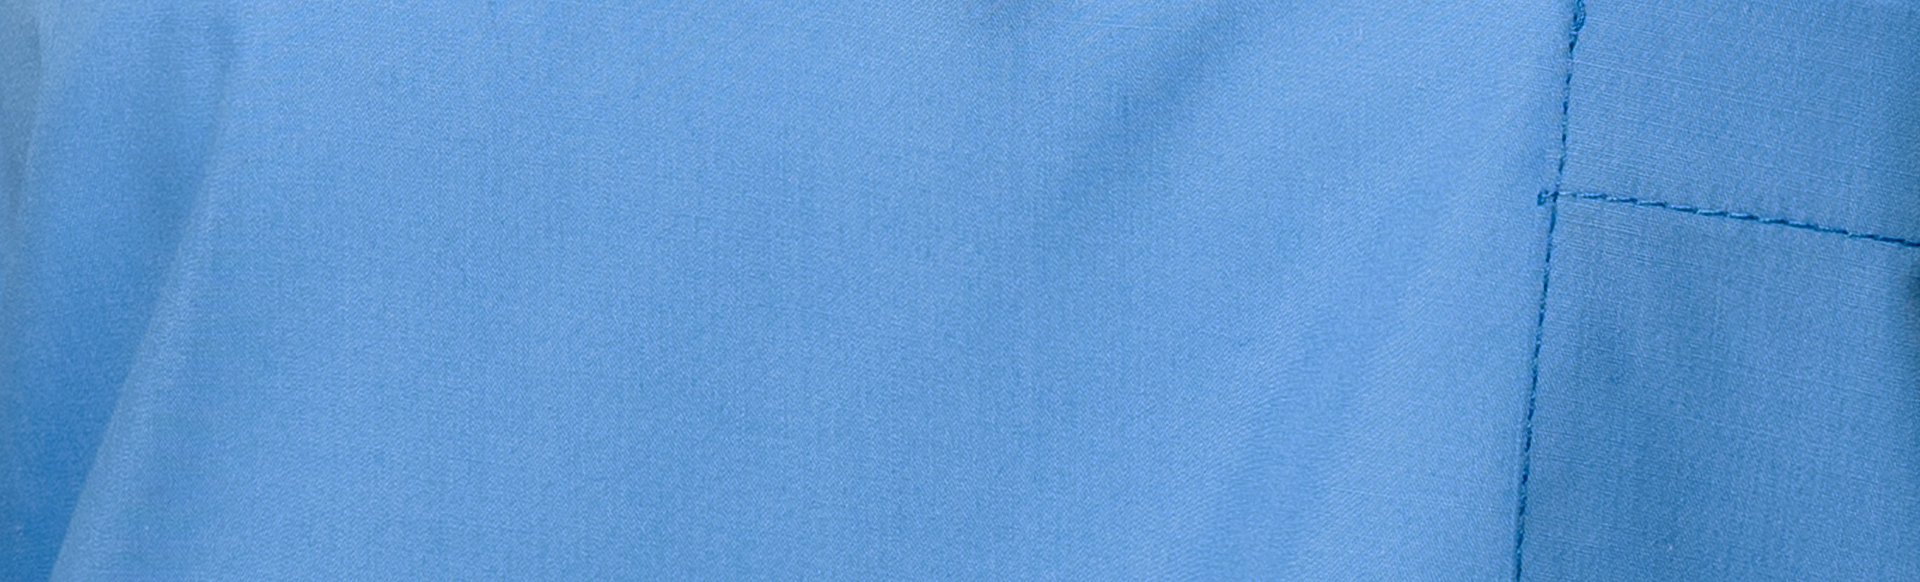 Blaues Hemd in Nahaufnahme.